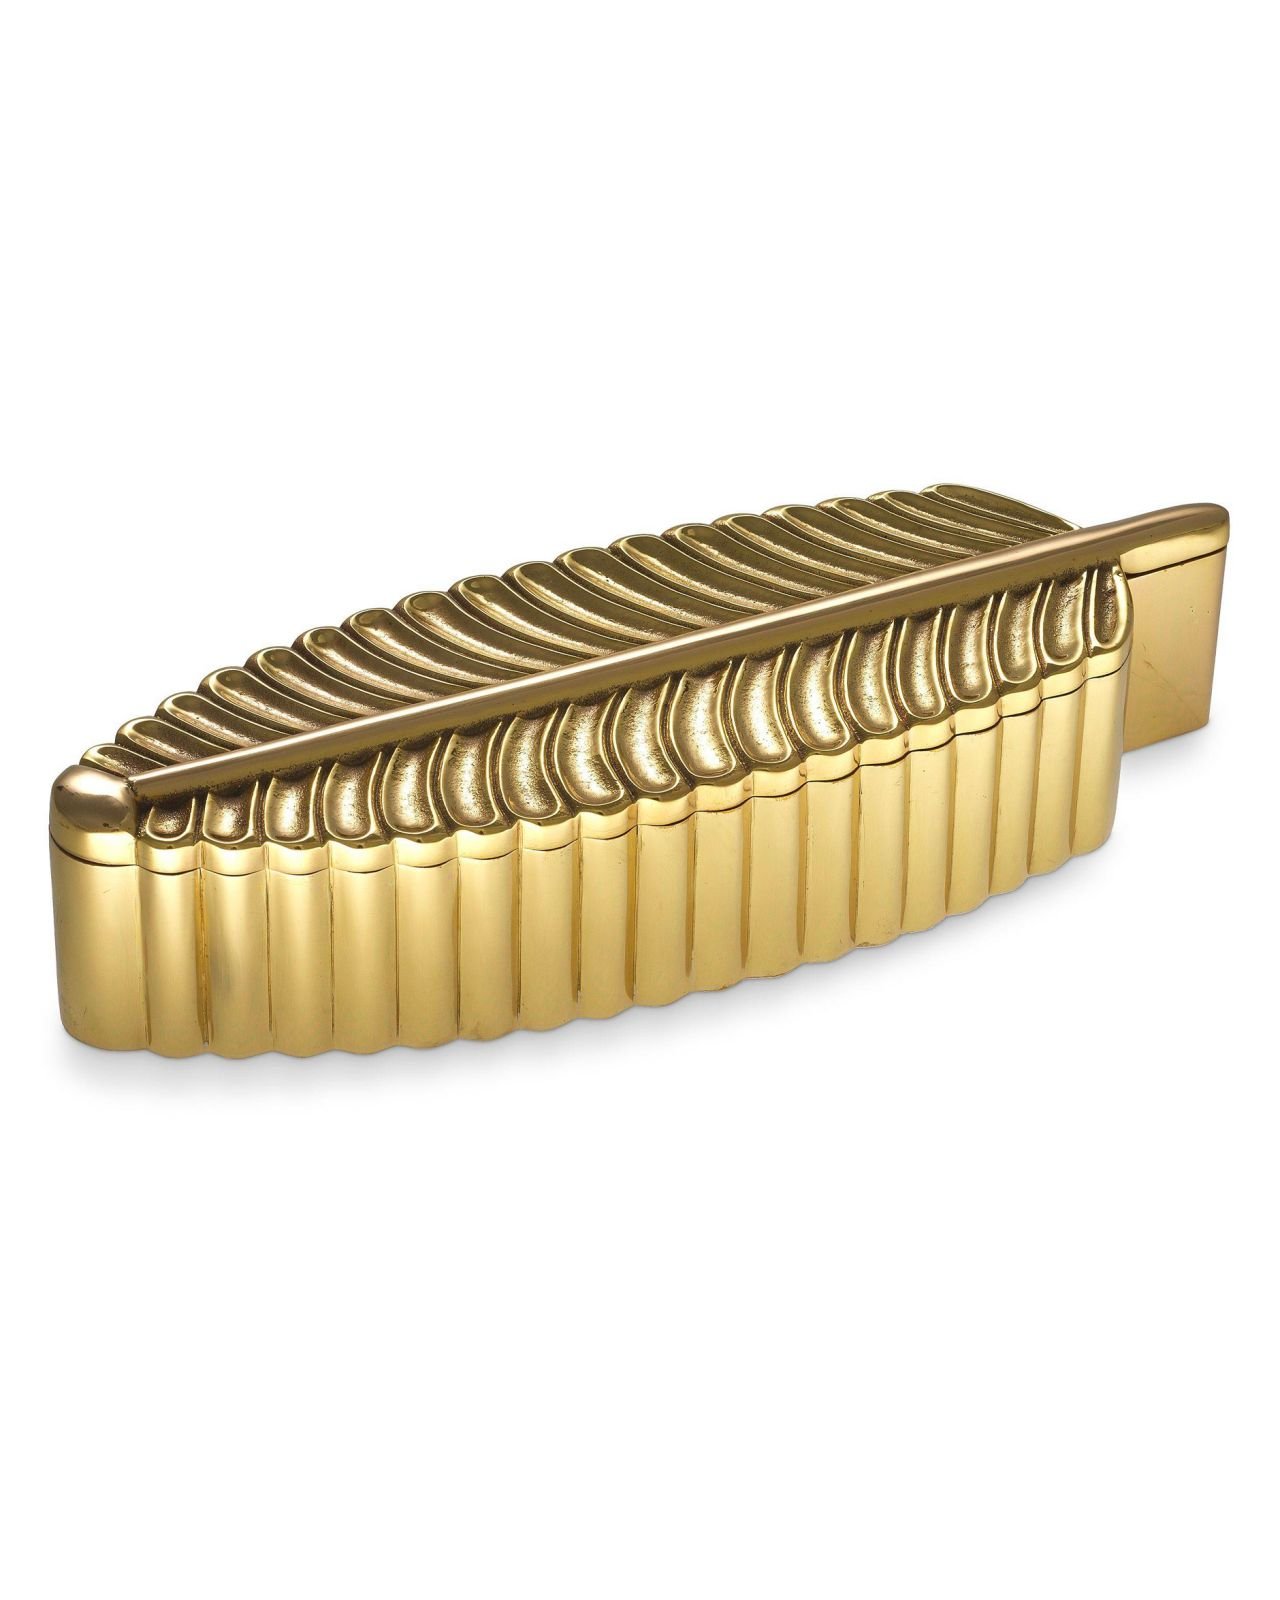 La Plume storage box brass